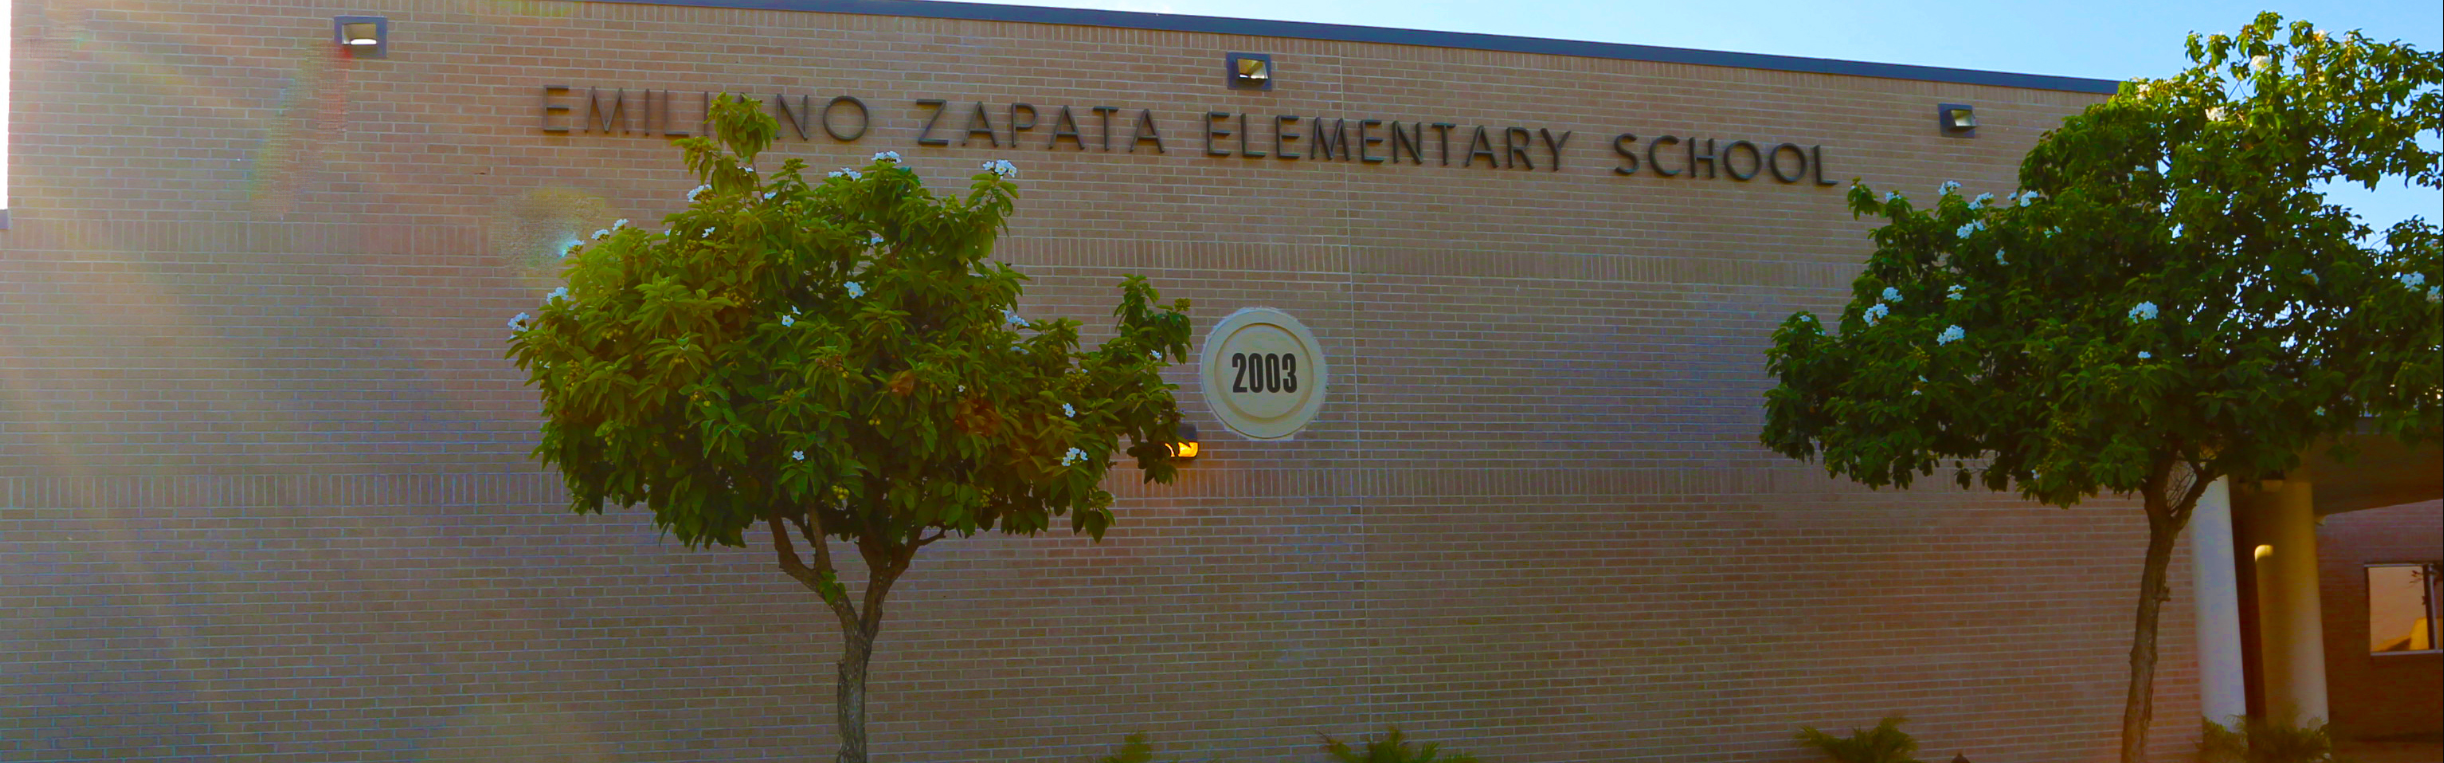 Emiliano Zapata Elementary